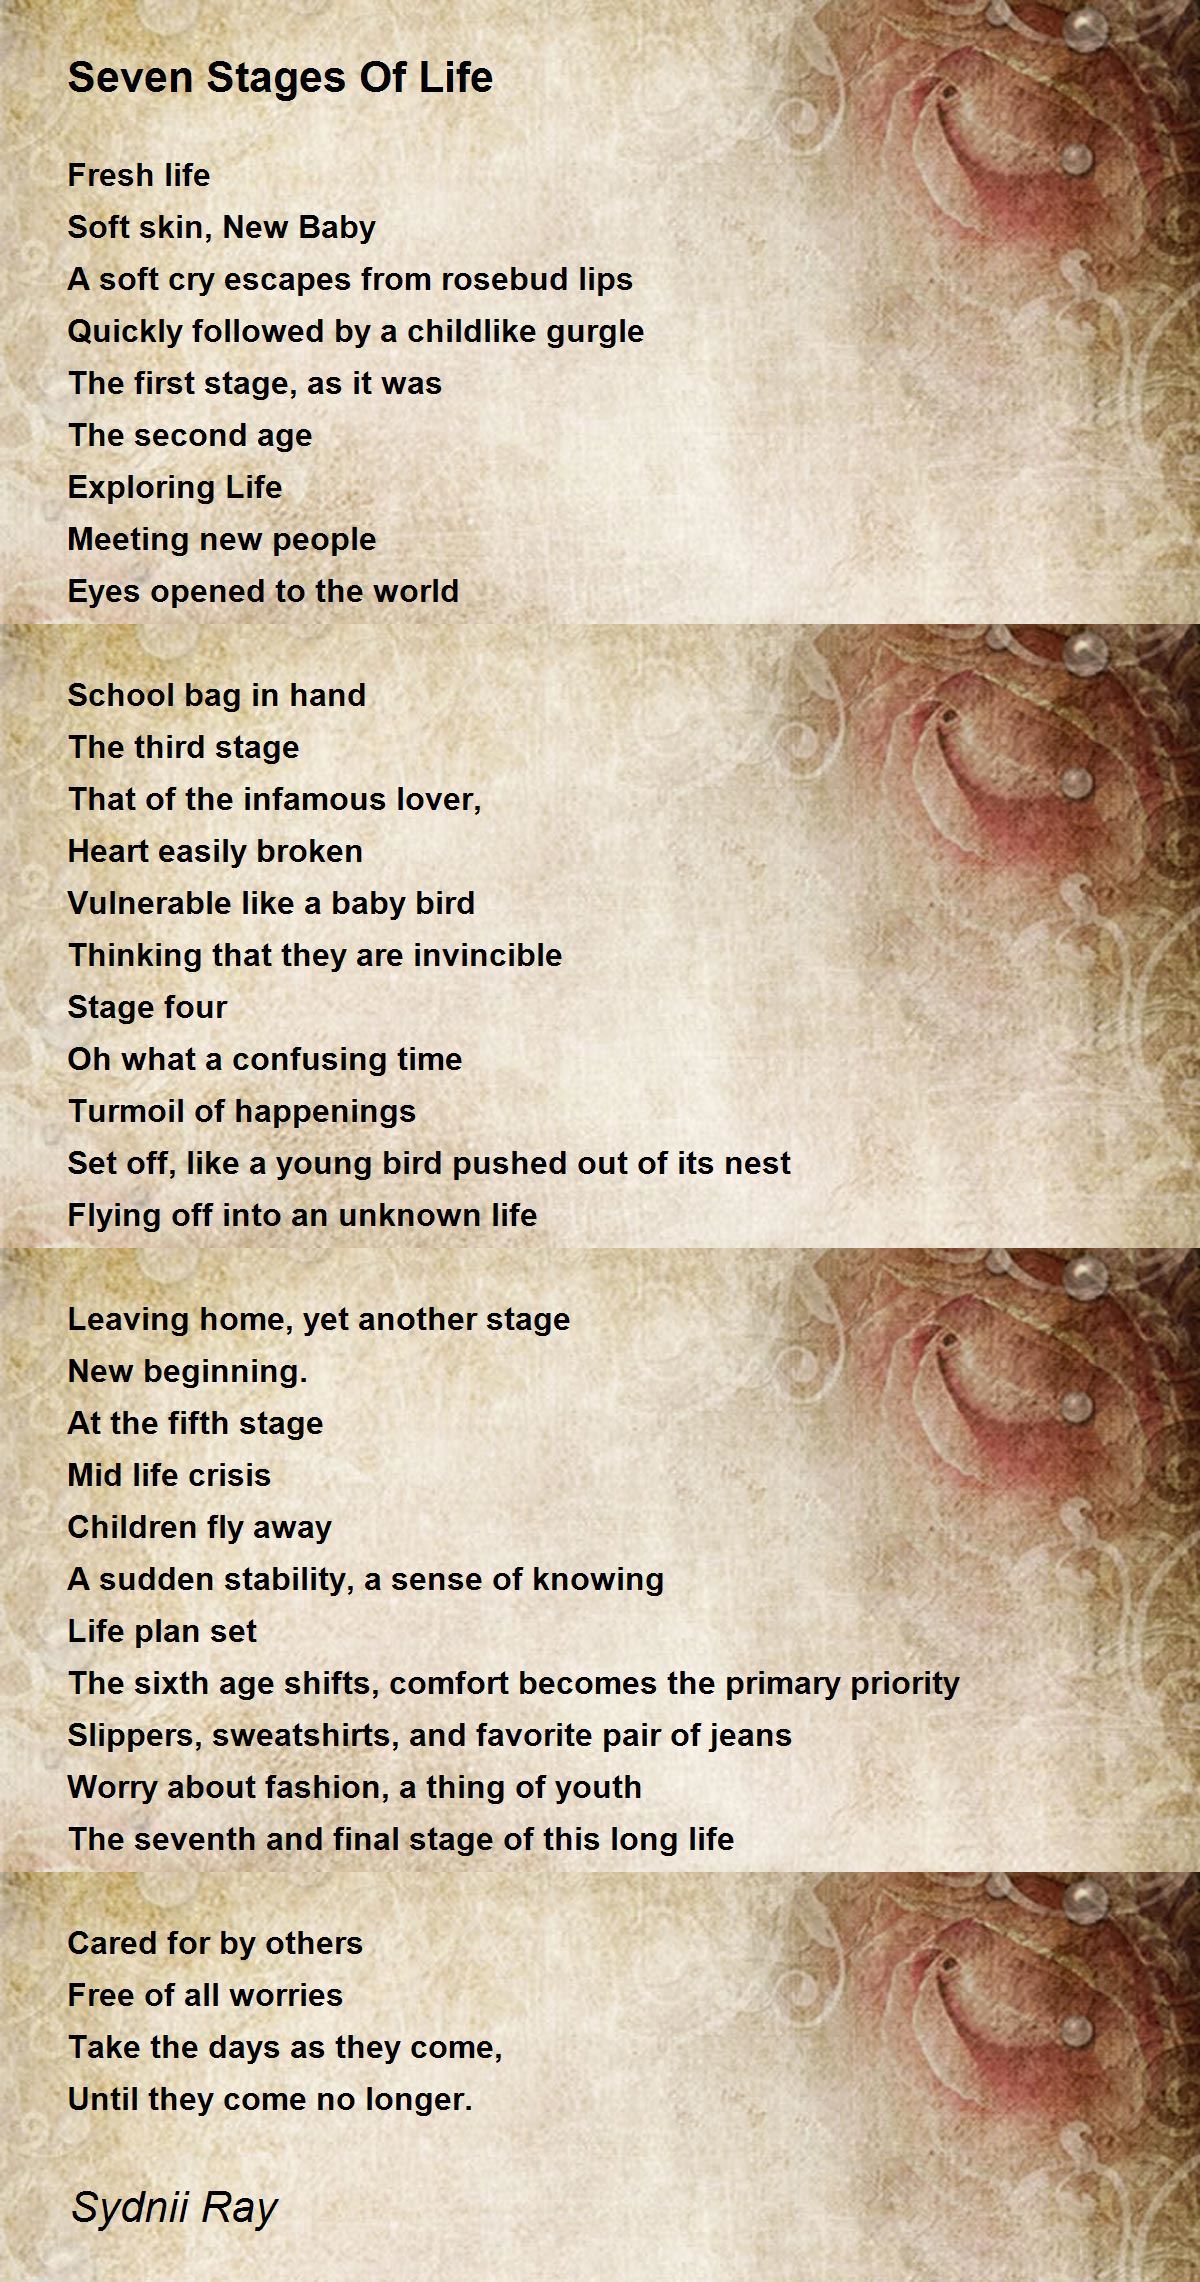 Seven Stages Of Life - Seven Stages Of Life Poem by Sydnii Ray